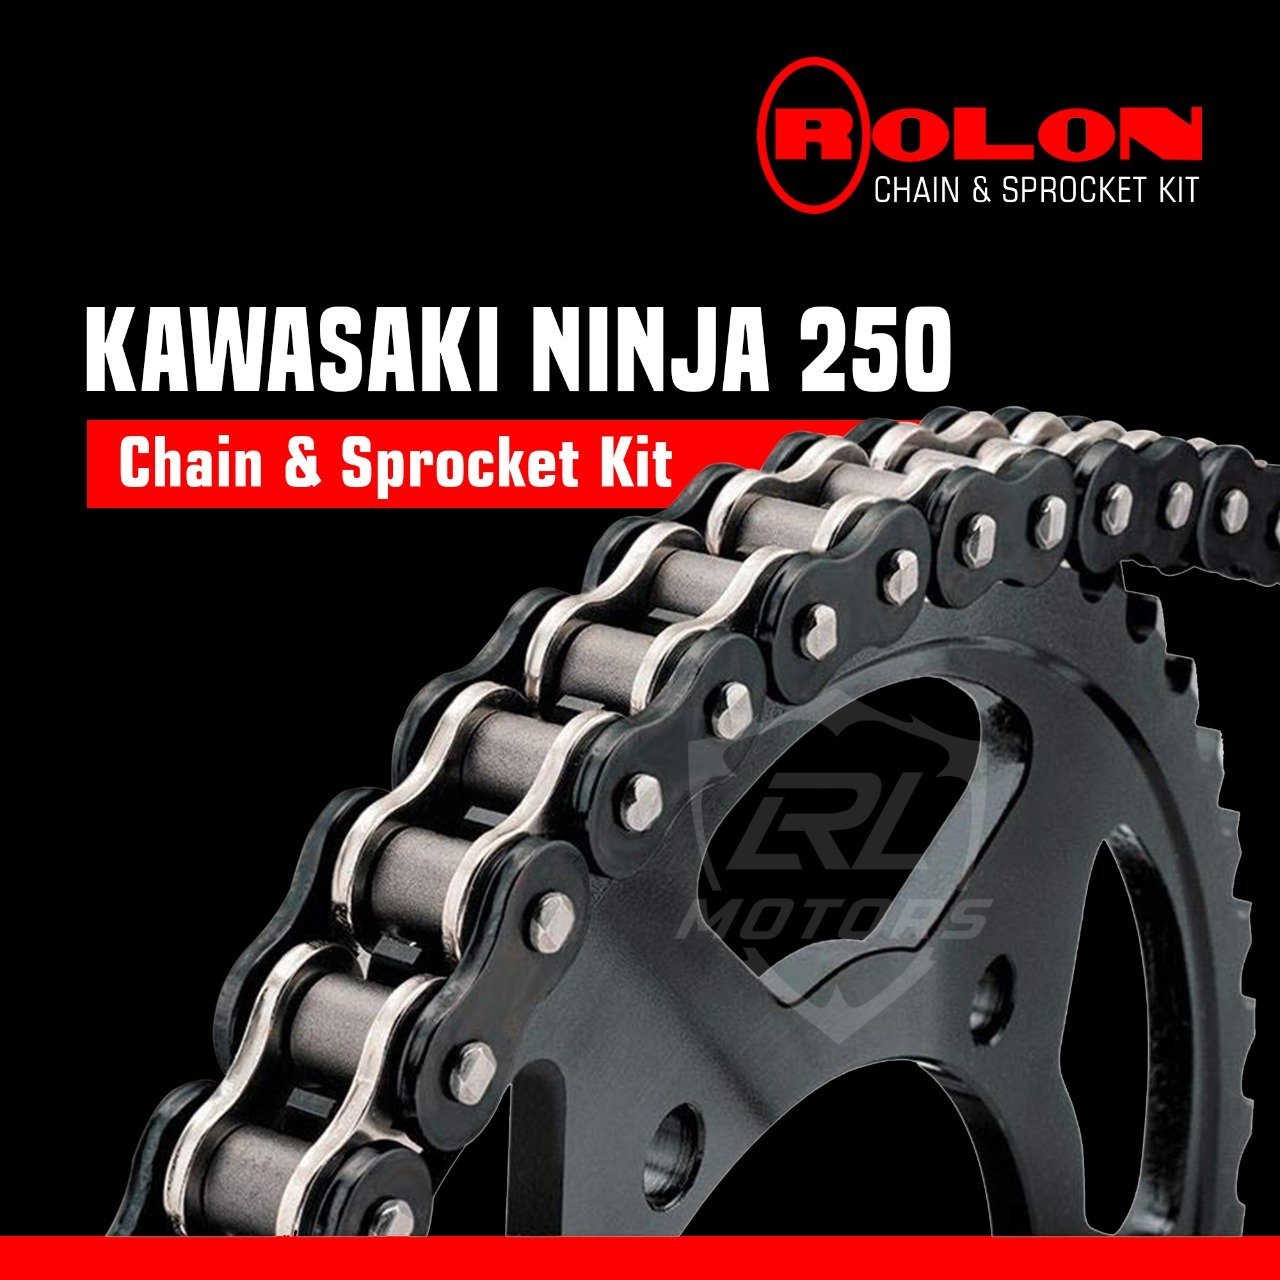 Kawasaki Ninja 250 Rolon chain & Sprocket Kit - LRL Motors